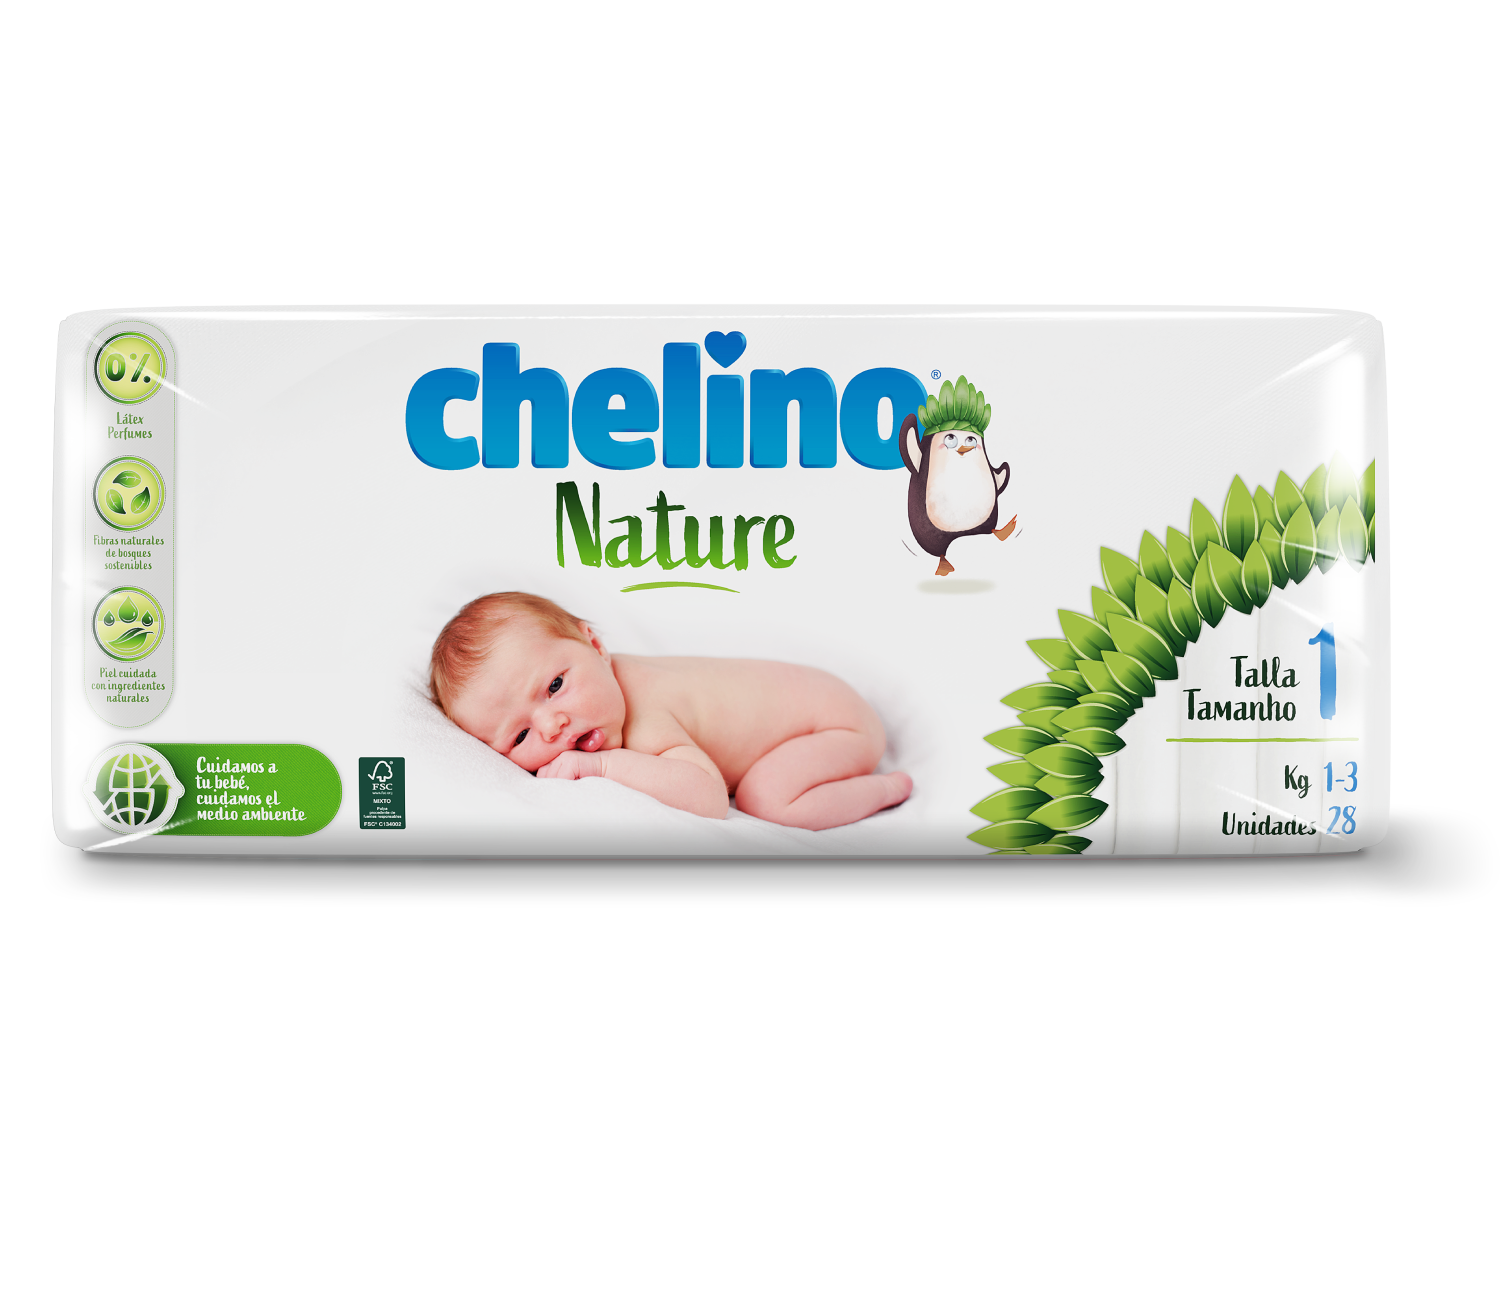 Nature archivos - Chelino